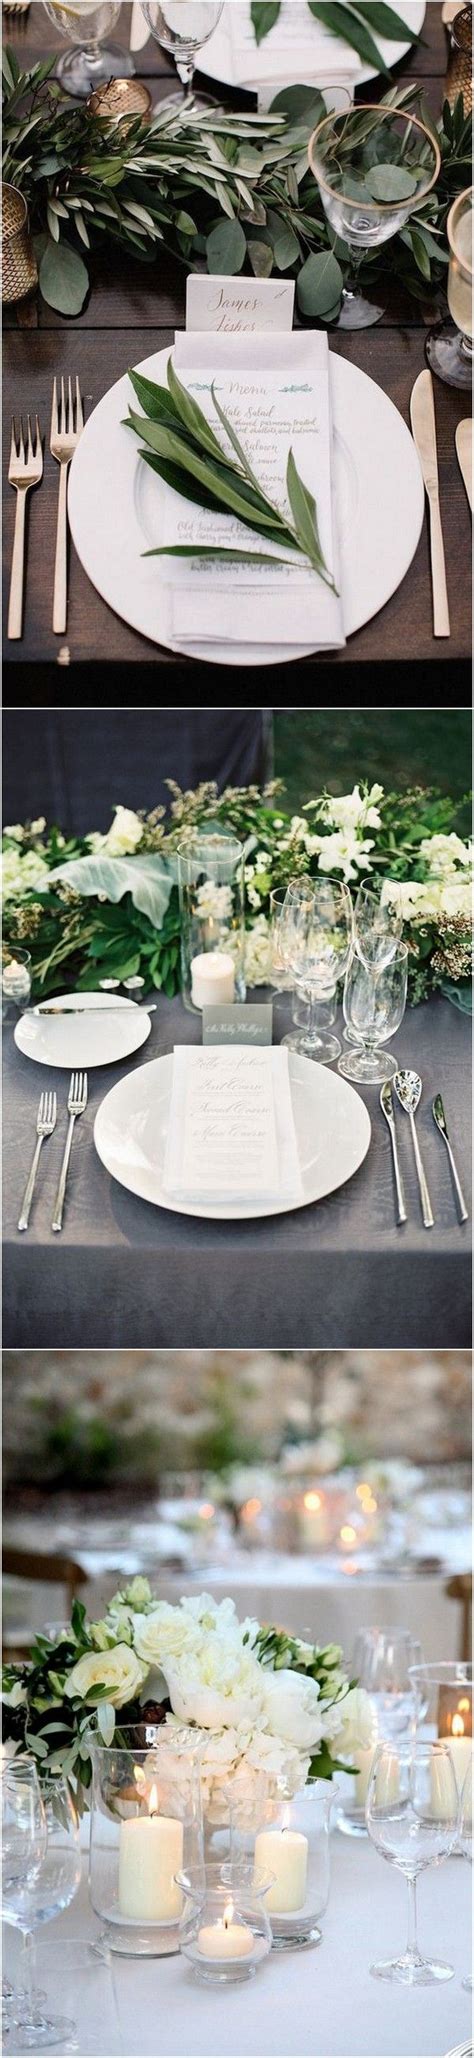 12 Super Elegant Wedding Table Setting Ideas Page 2 Of 2